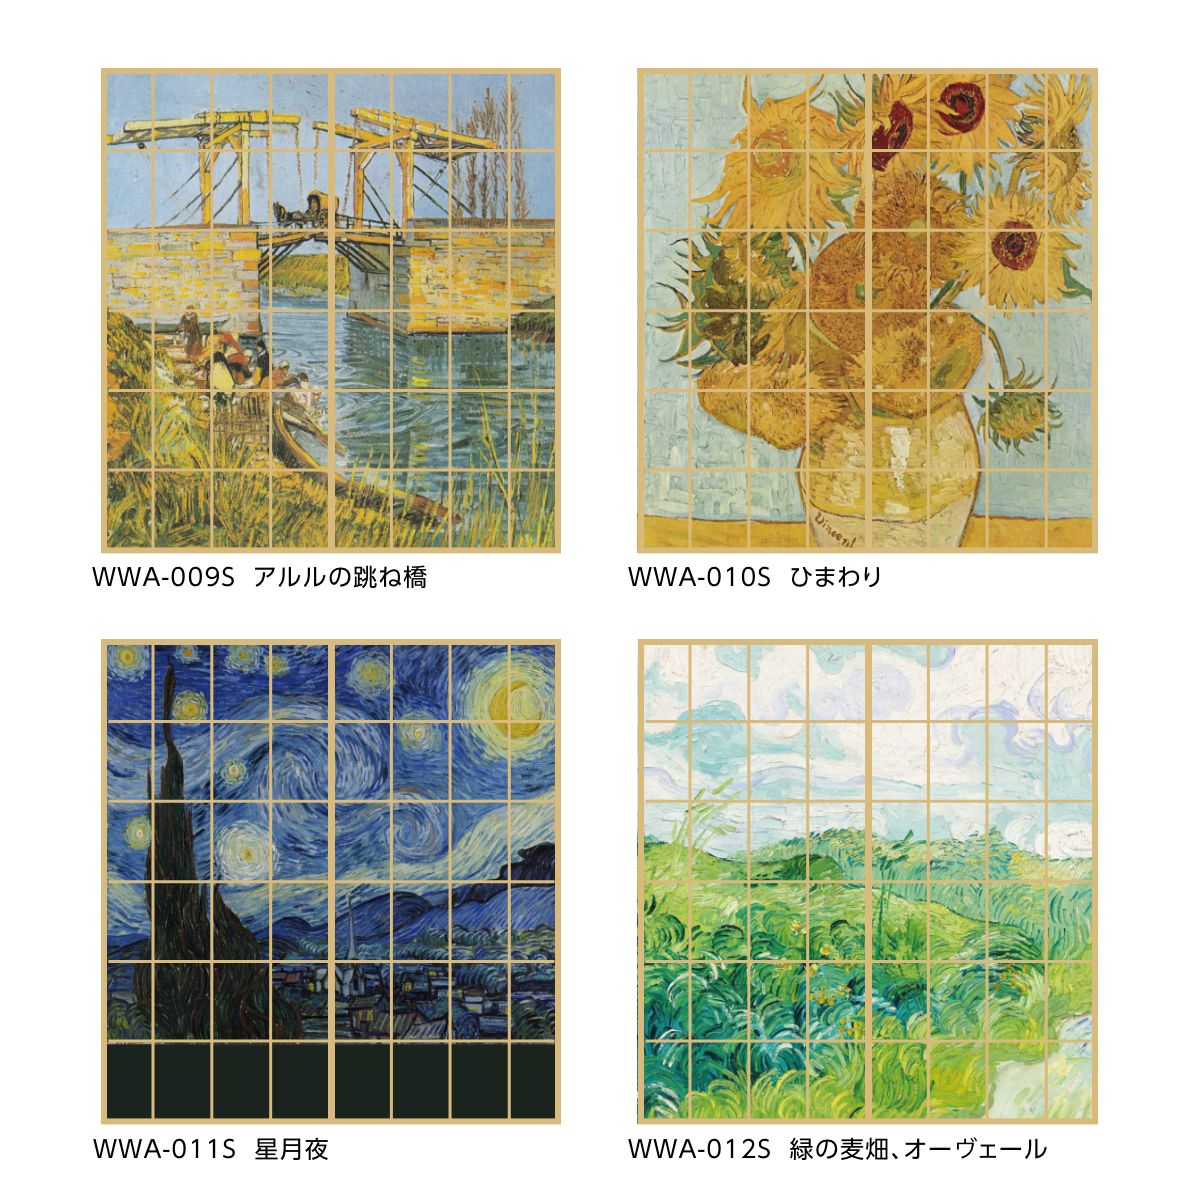 World Famous Shoji Paper Van Gogh Arles Drawbridge Set of 2 Glue Type Width 91cm x Length 182cm Shoji Paper Asahipen WWA-009S